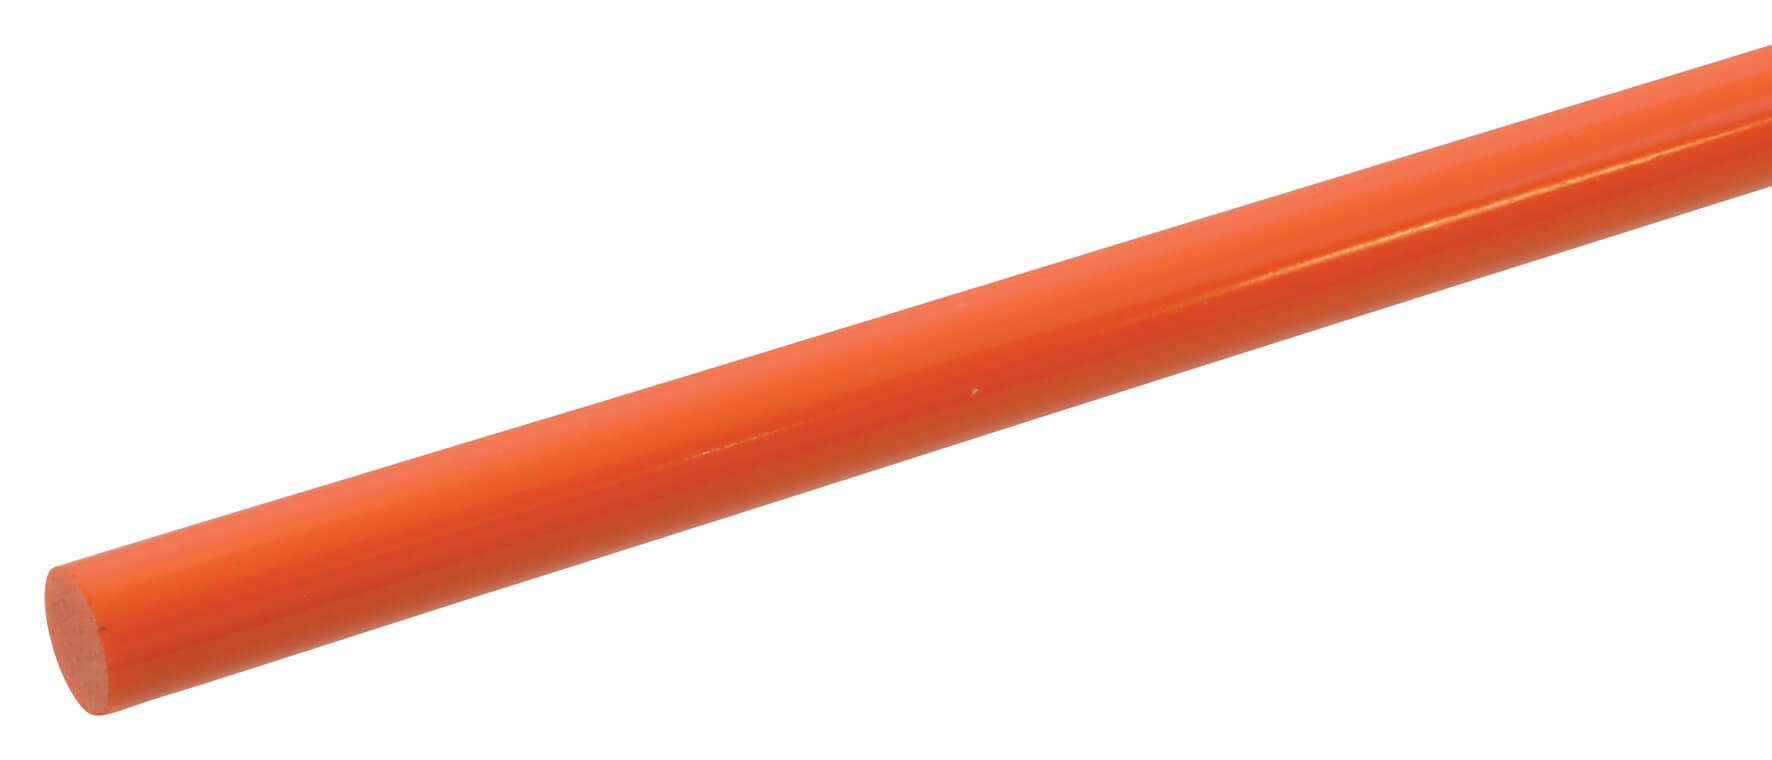 Acrylic Rod 4.8mm x 610mm  - Solid Orange